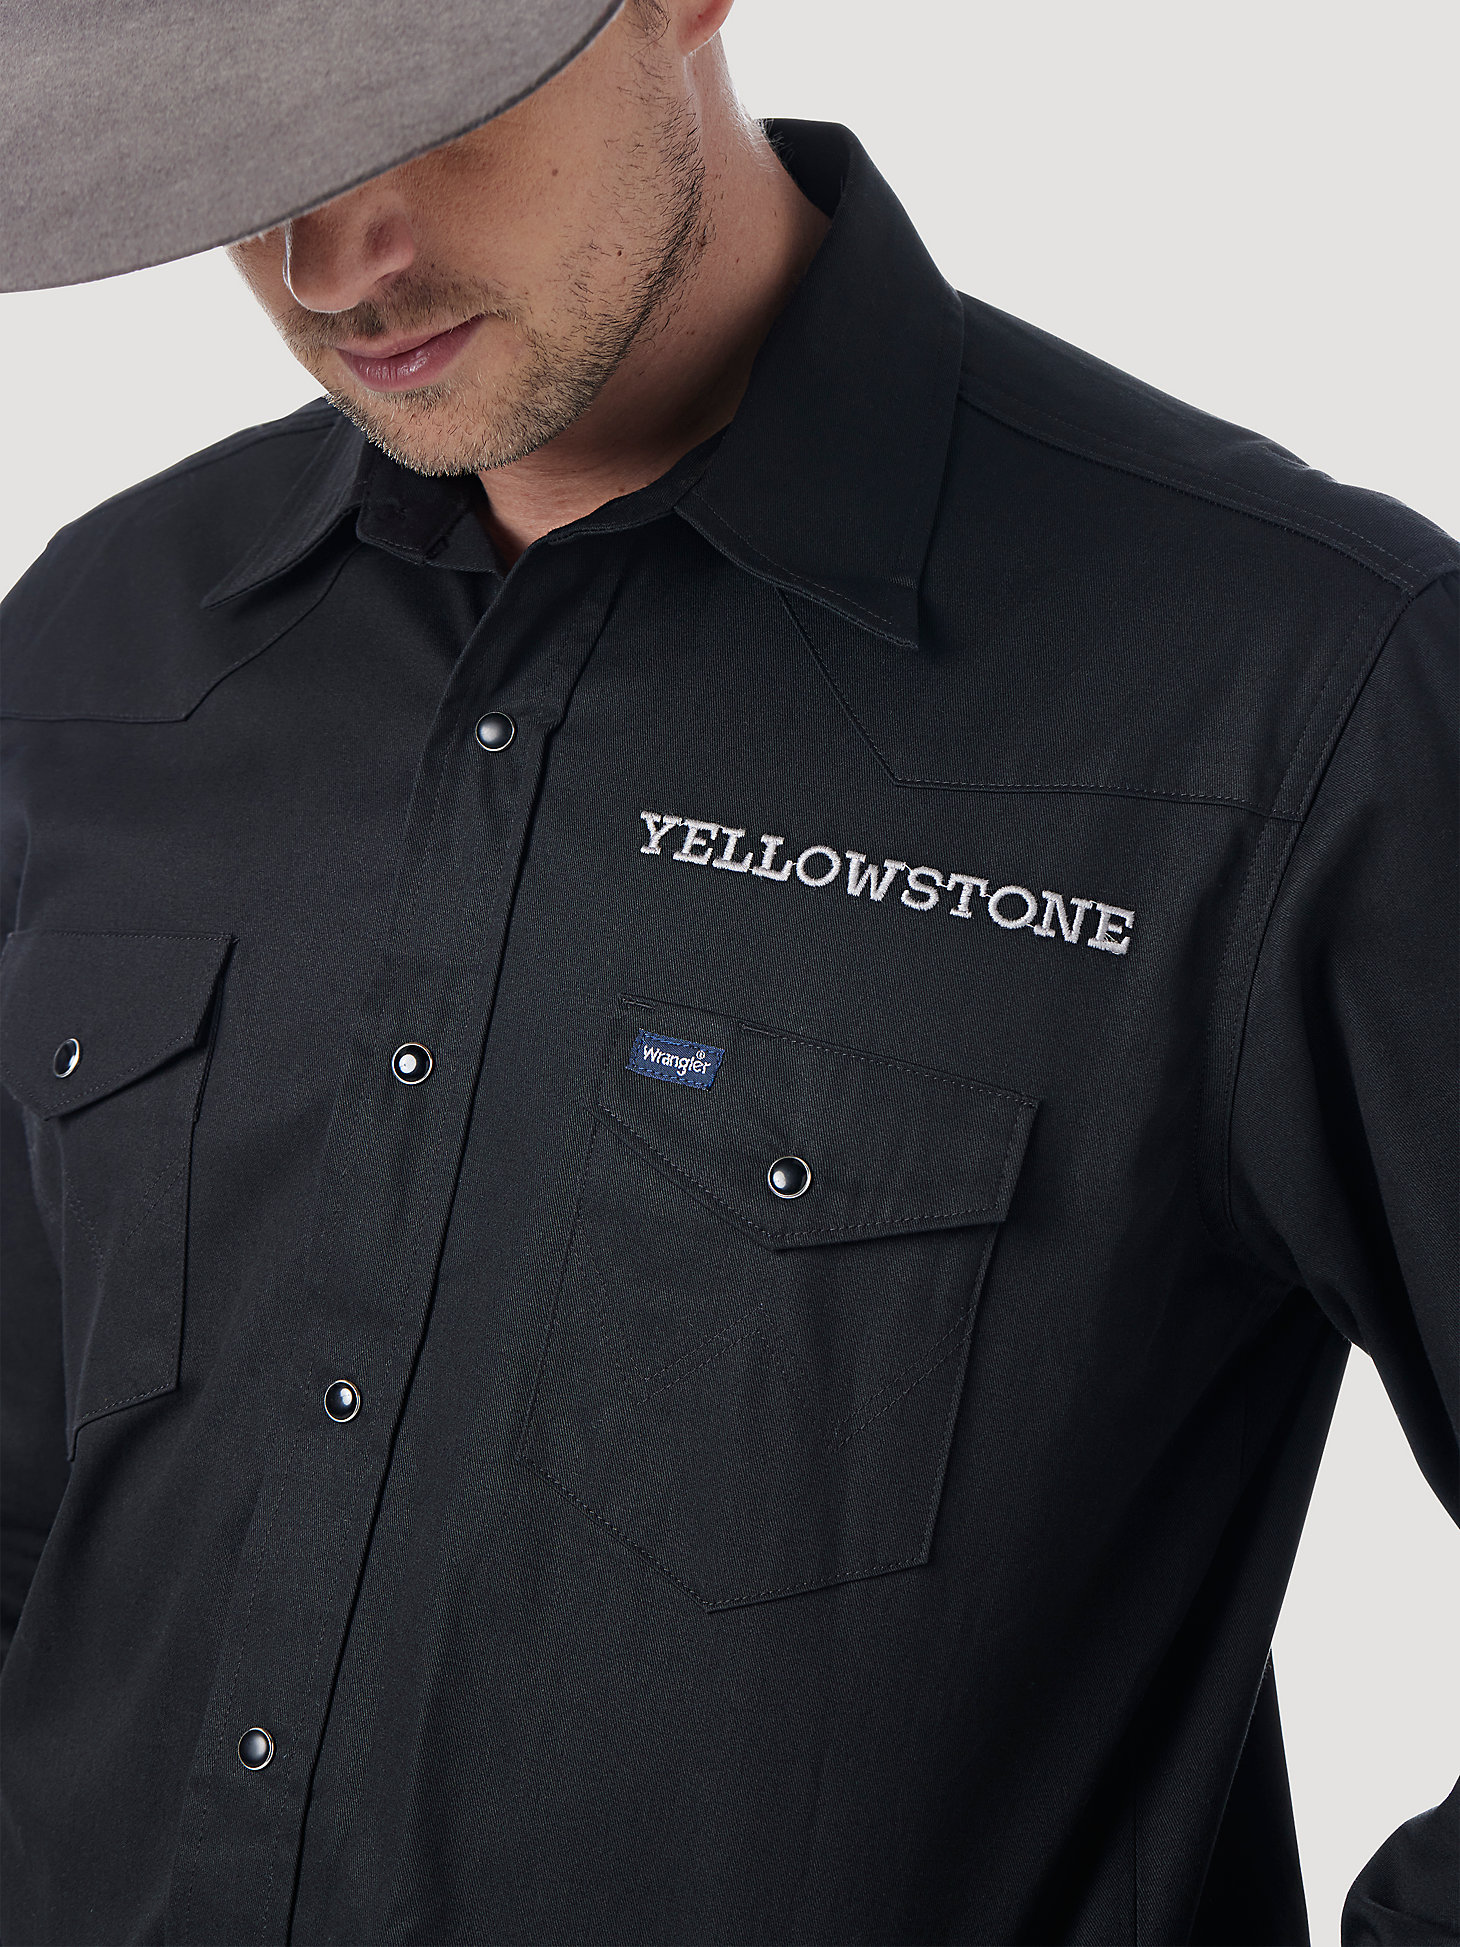 Wrangler x Yellowstone Desertscape Twill Snap Shirt in Black alternative view 4